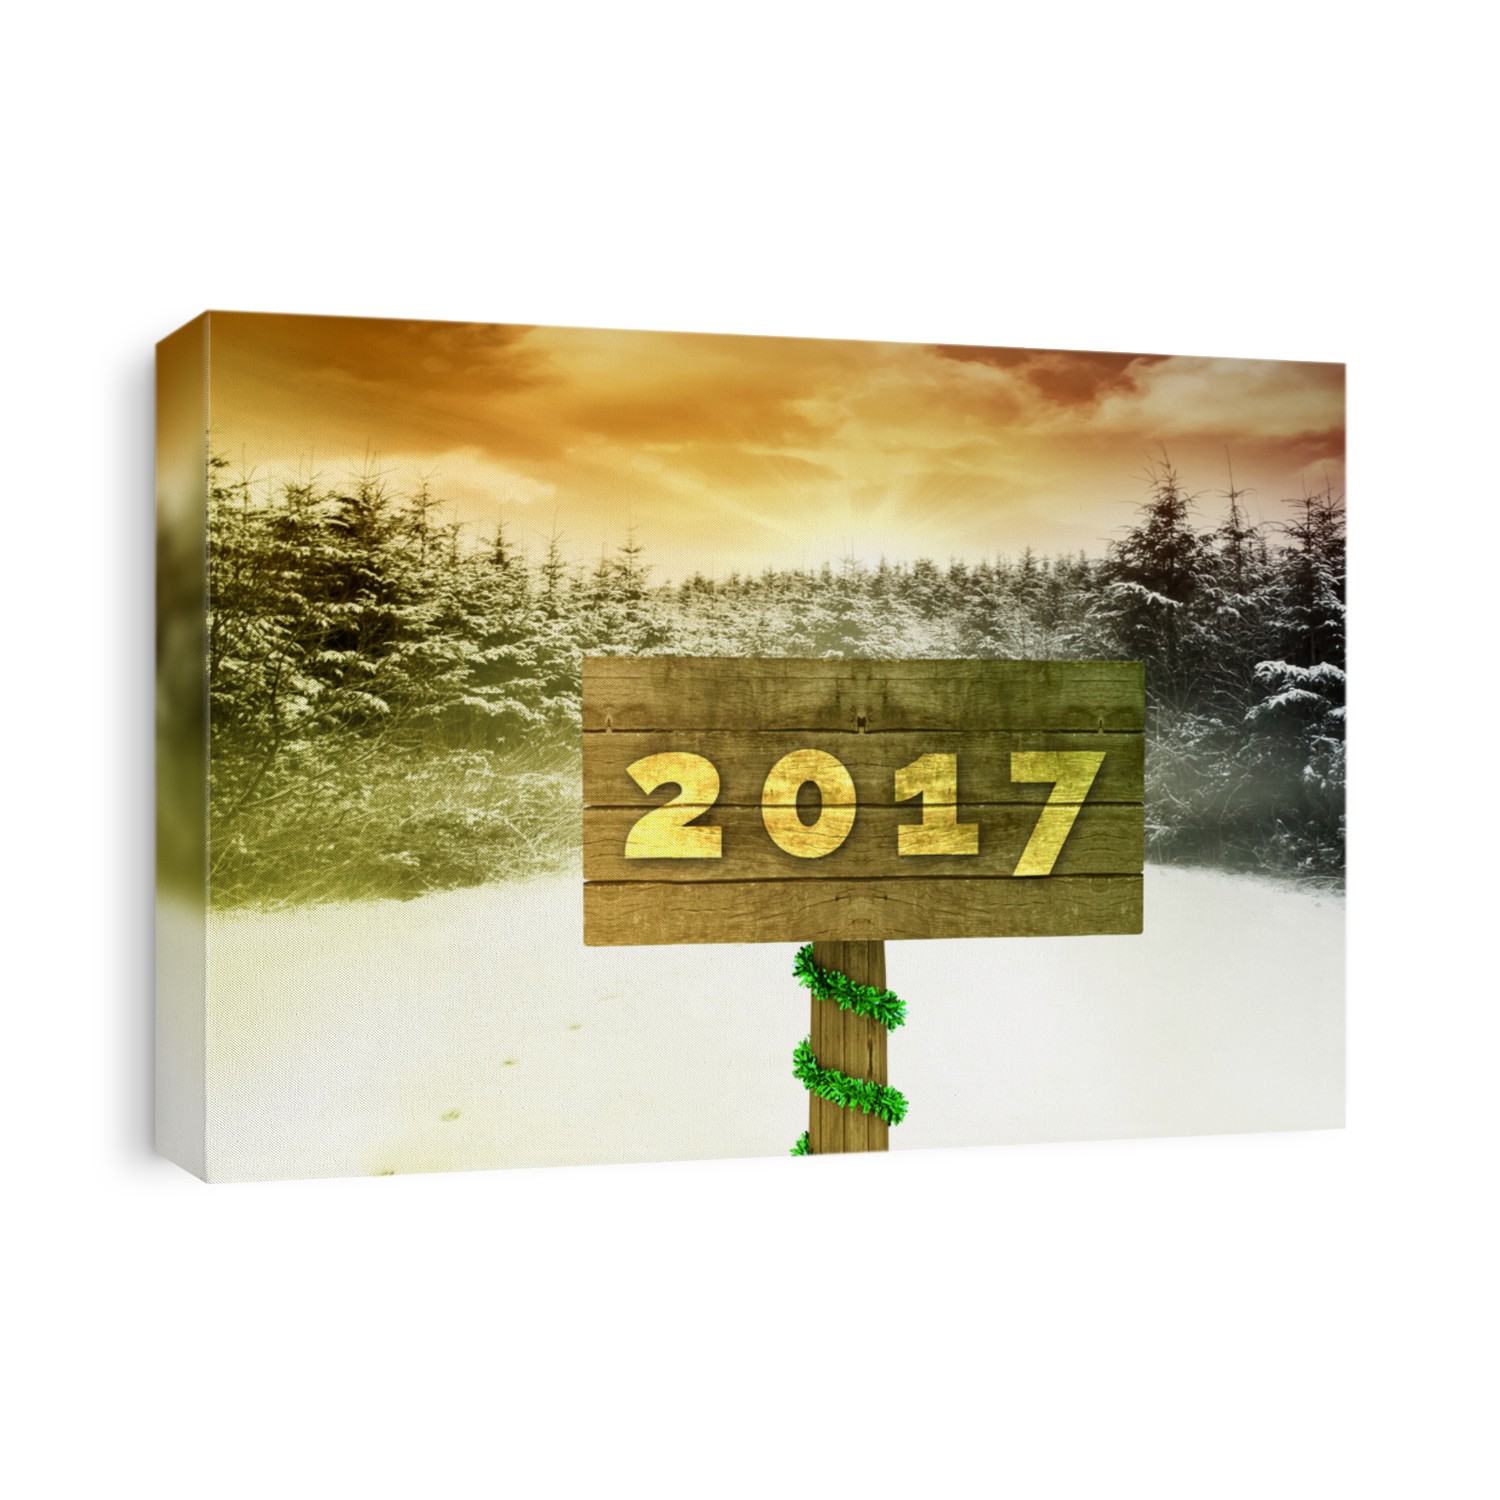 Digital image of new year 2017 against snow scene